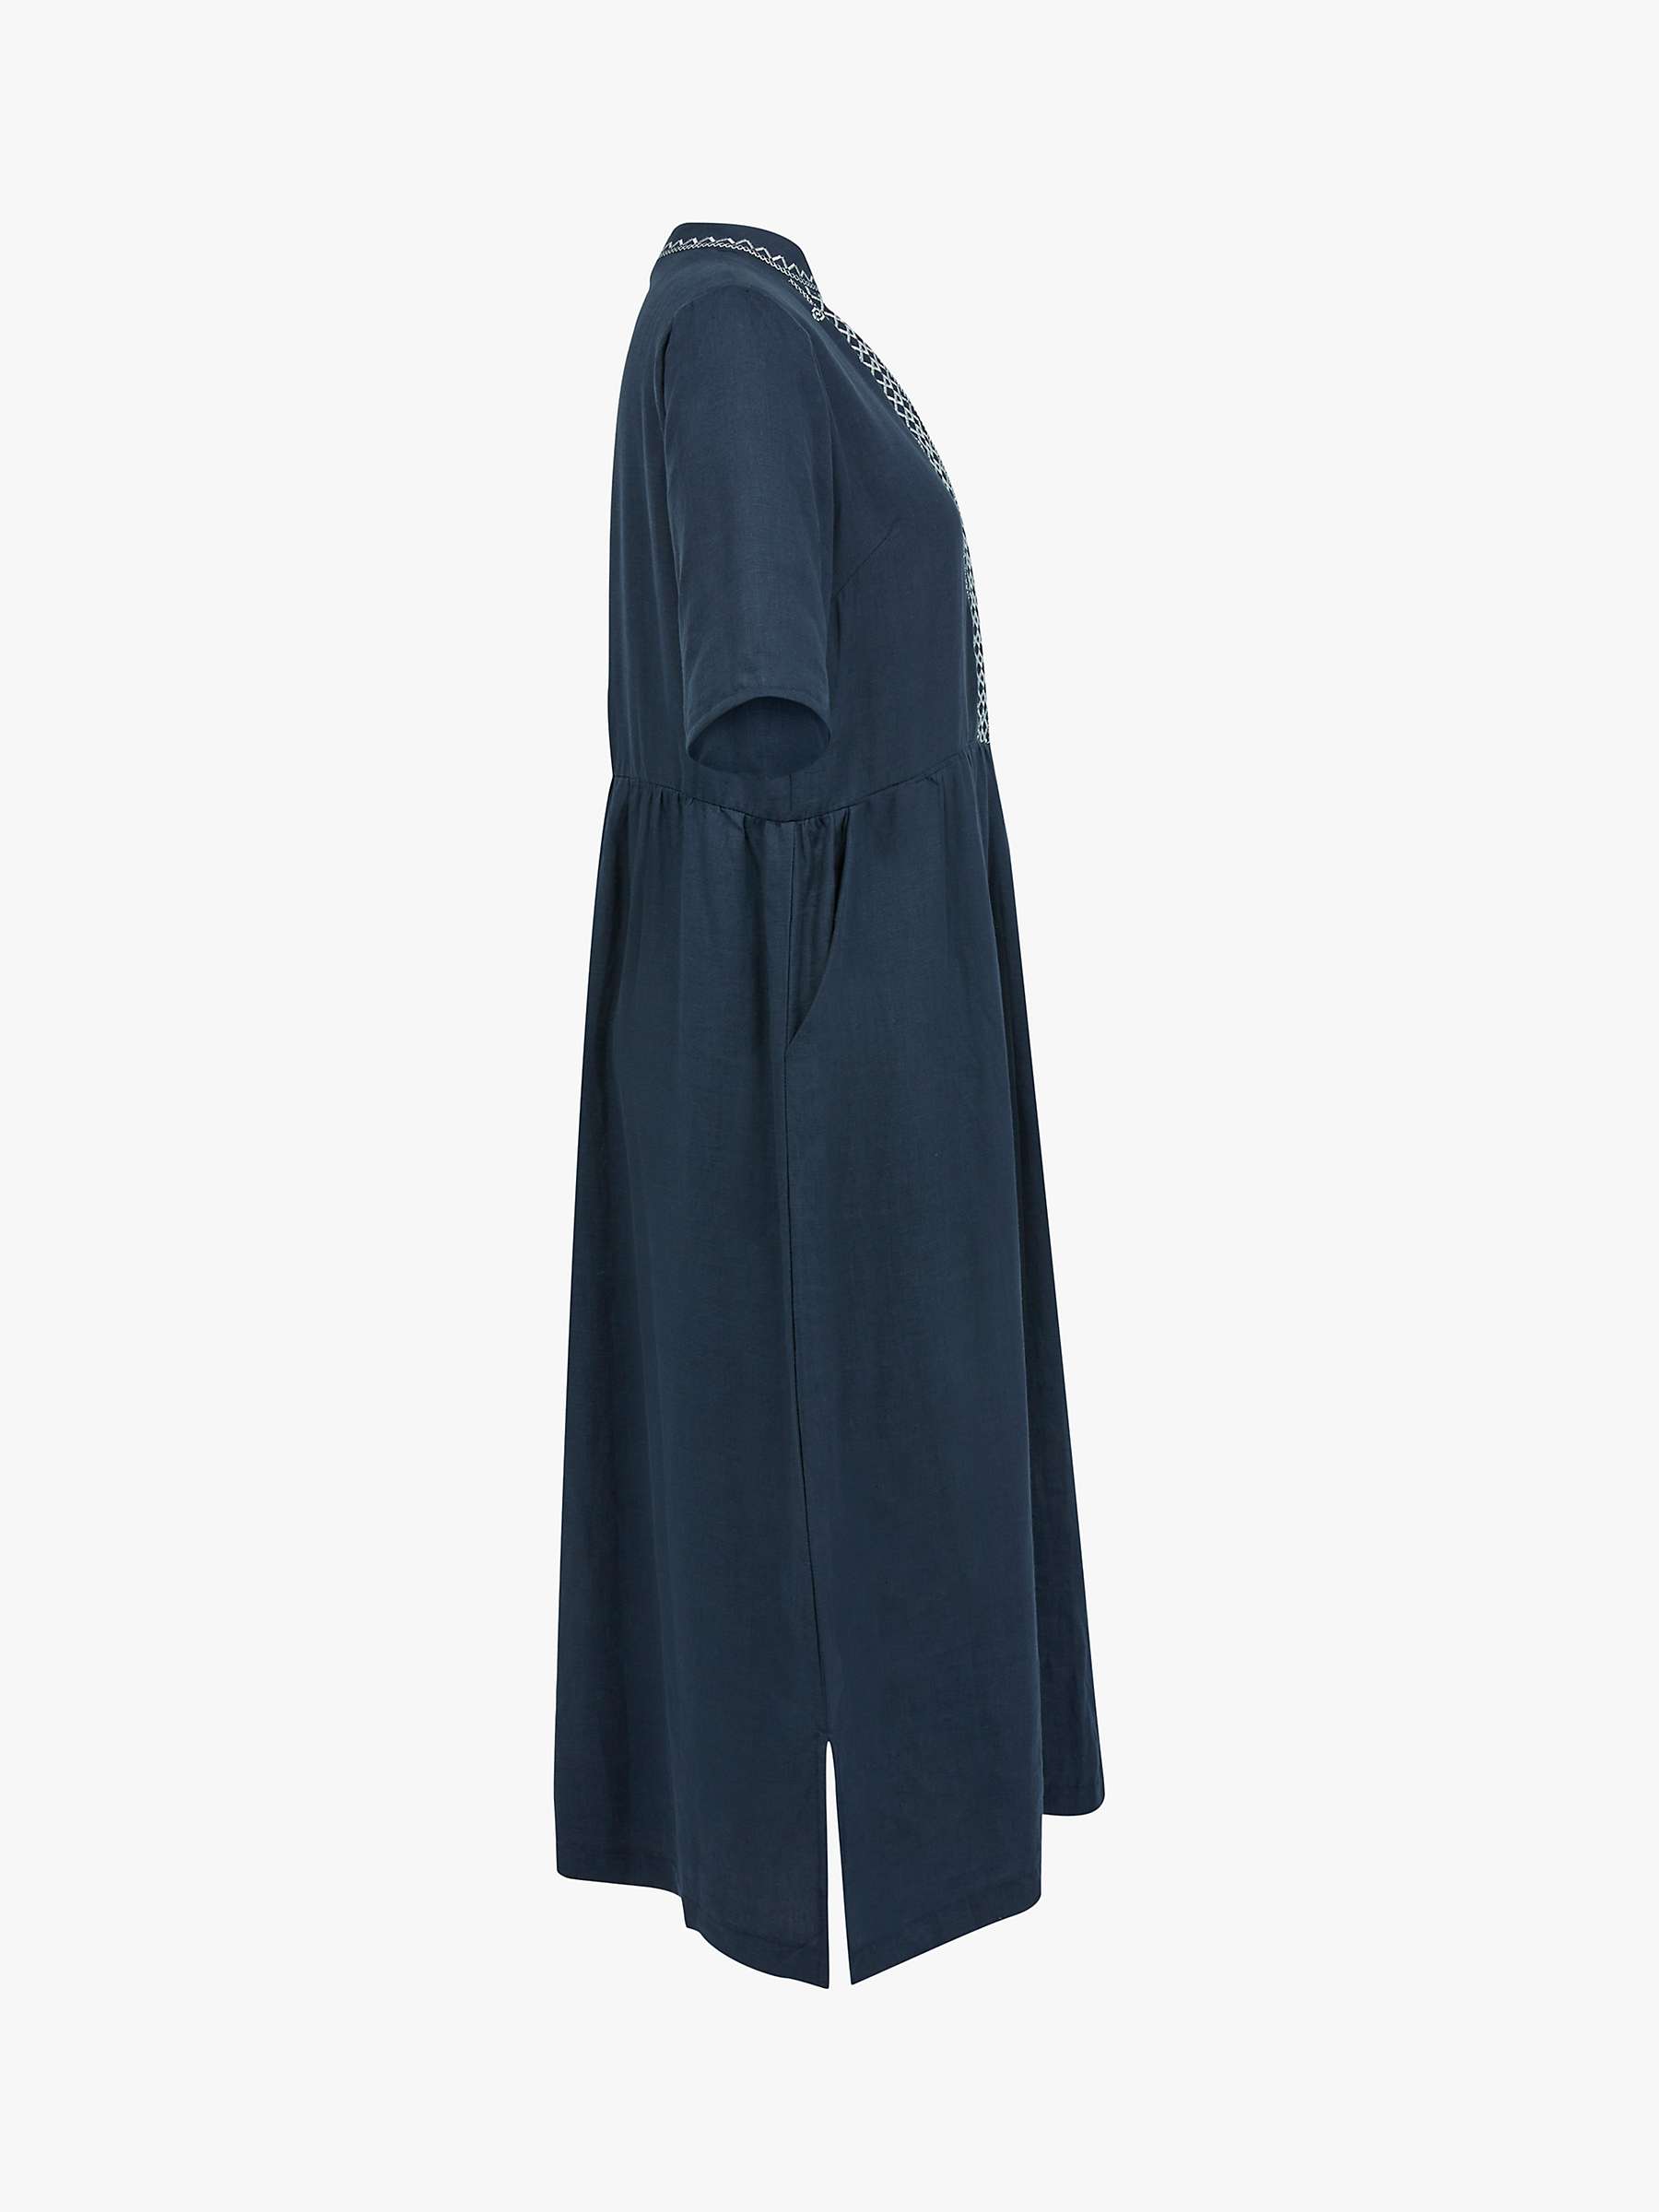 Buy Celtic & Co. Embroidered Collar Linen Midi Dress, Dark Navy Online at johnlewis.com